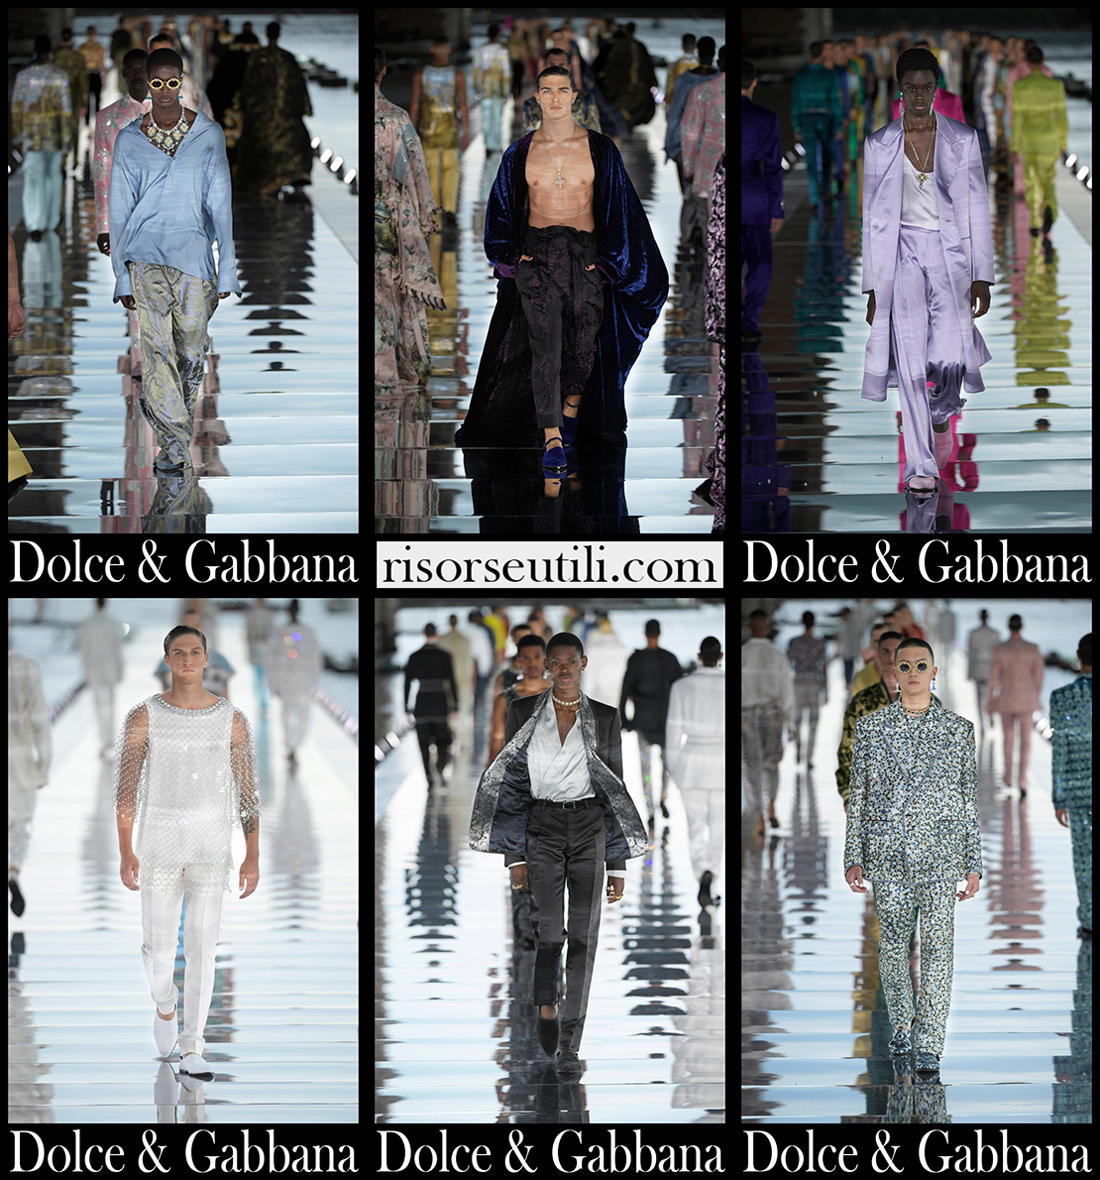 Dolce Gabbana haute couture mens fashion collection